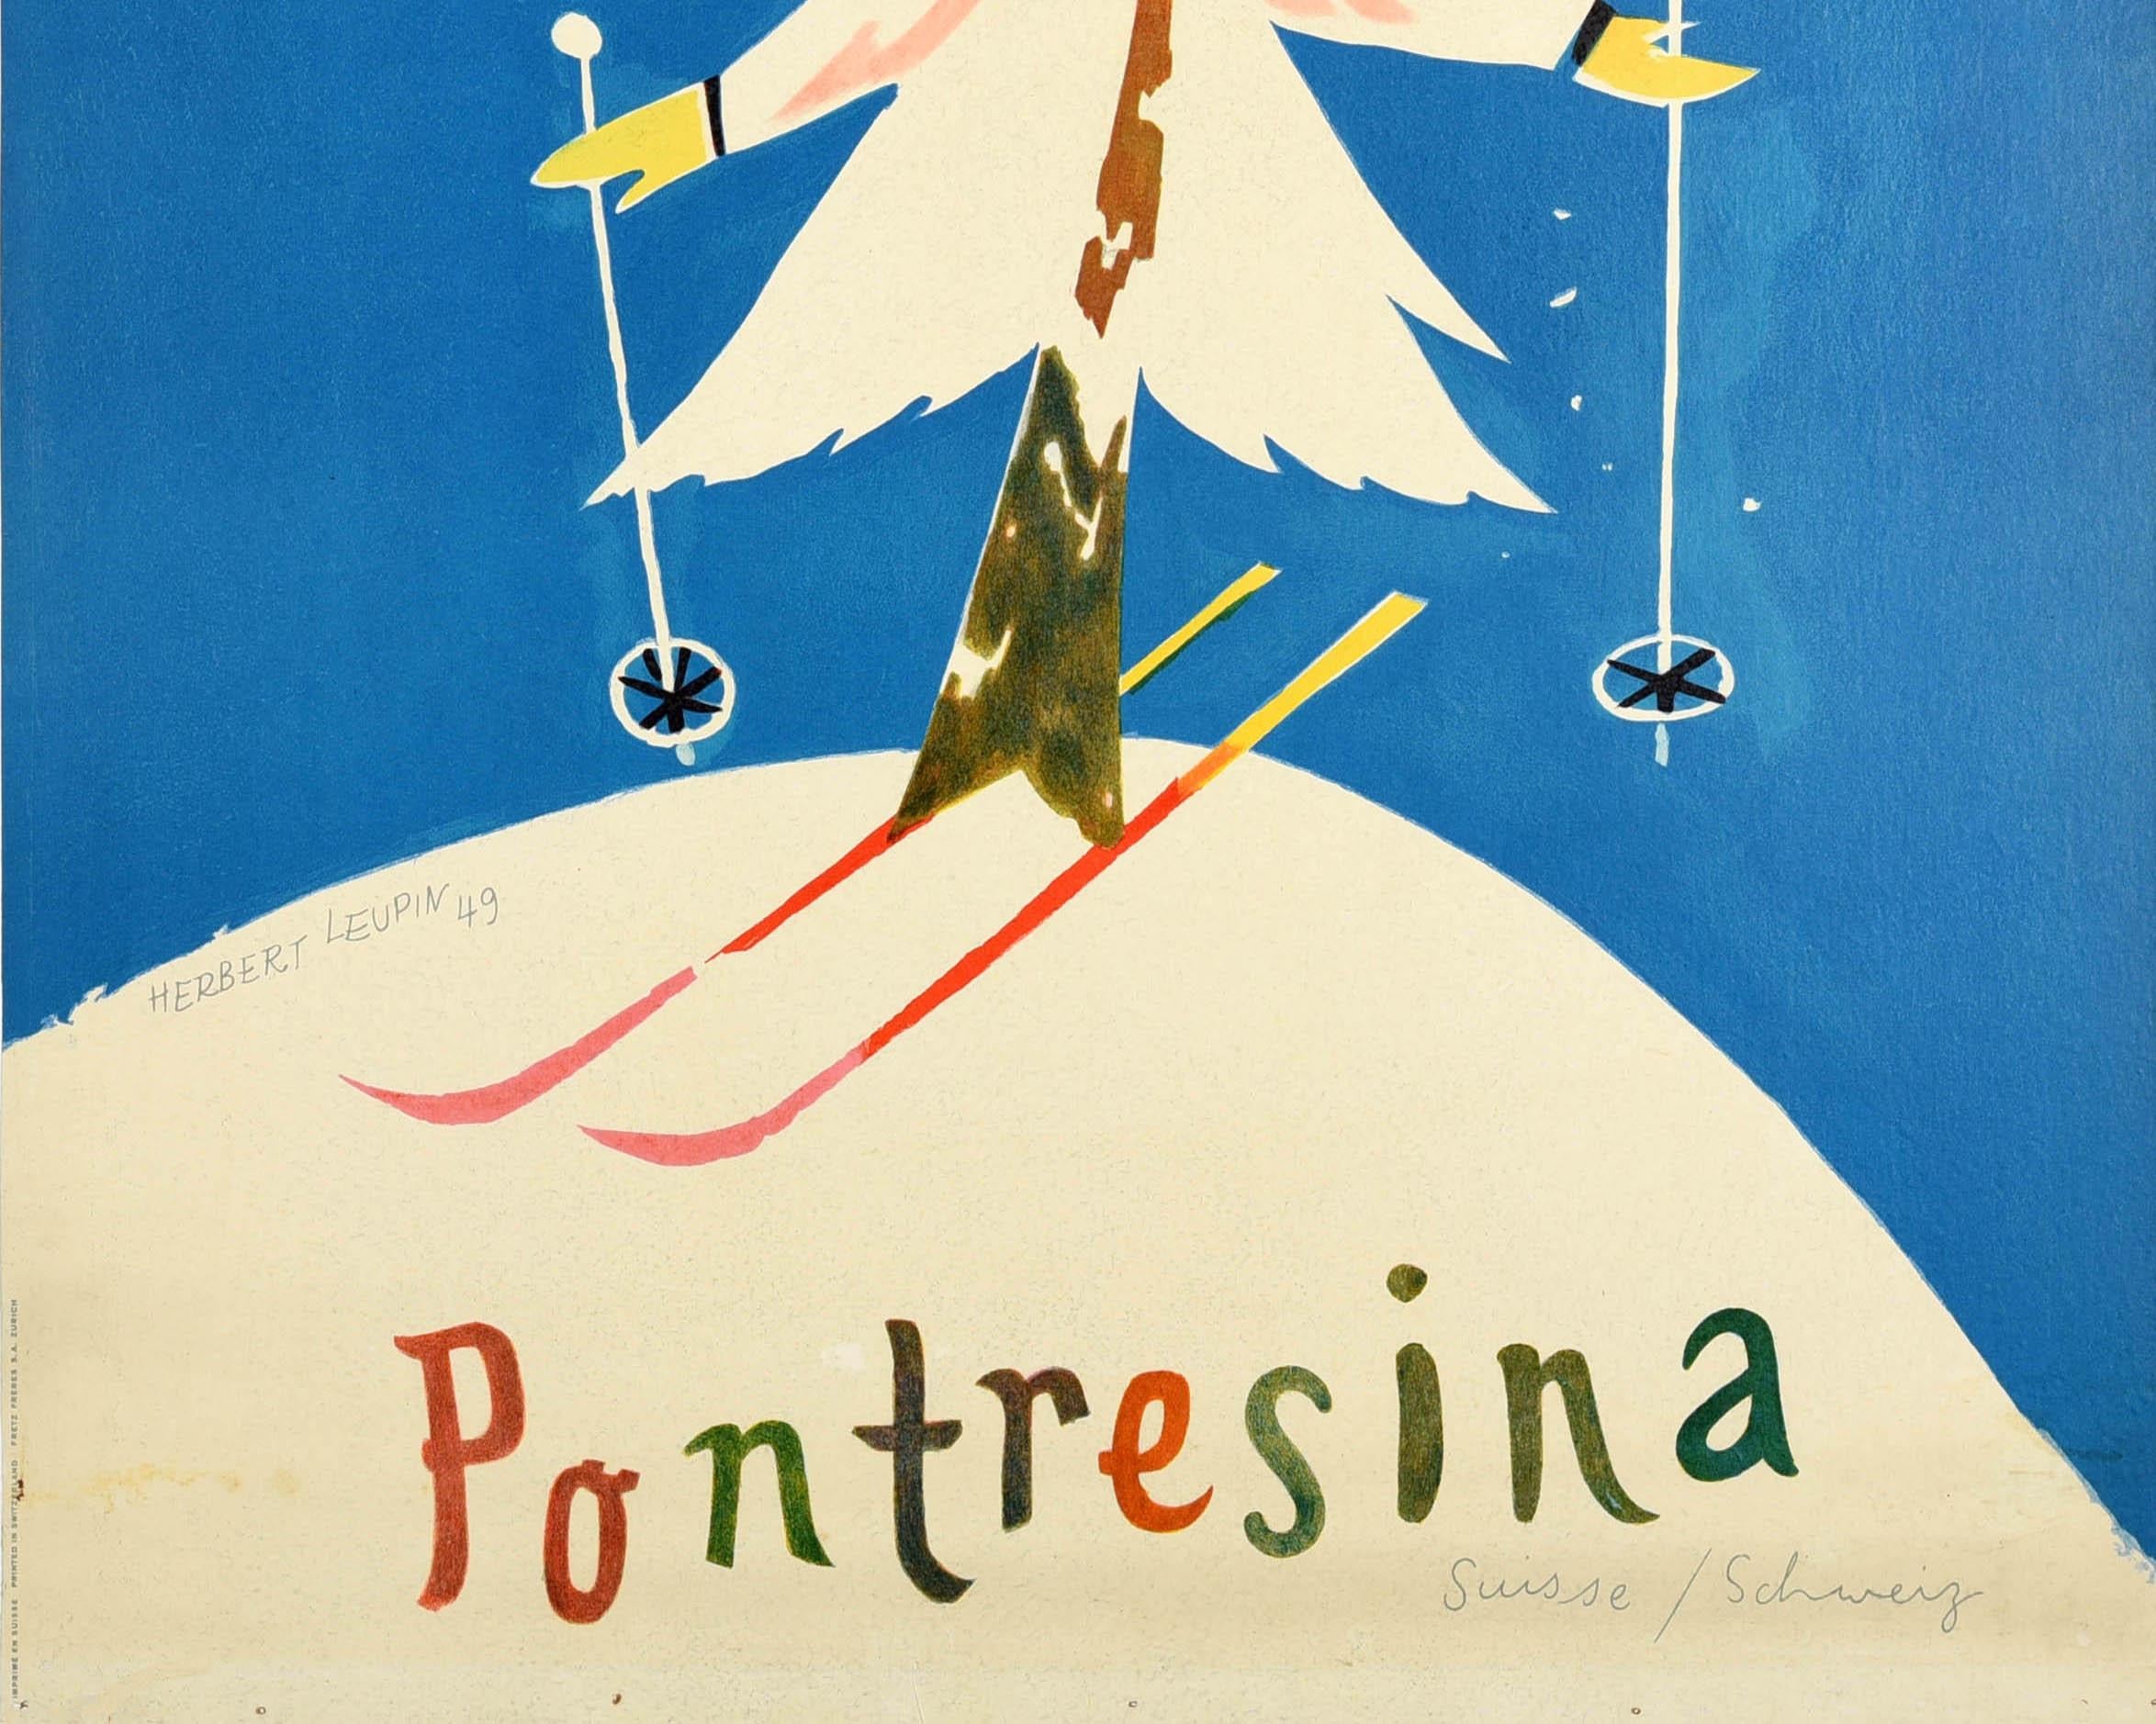 Original Vintage Winter Sport Ski Poster Pontresina Resort Switzerland Leupin - Blue Print by Herbert Leupin